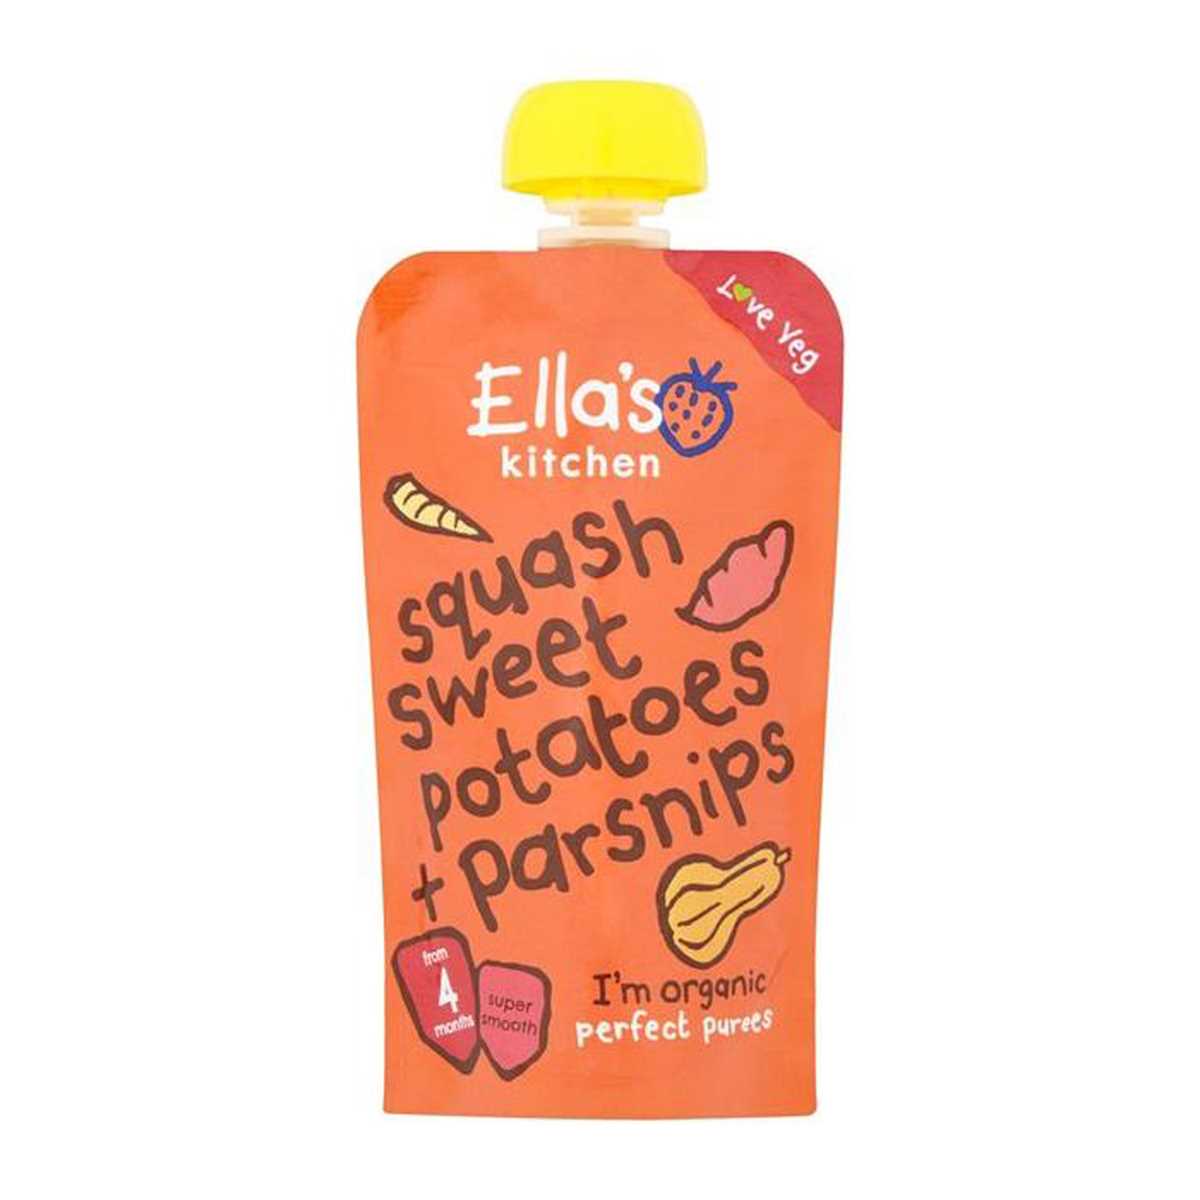 Ellas Kitchen Squash Sweet Potatoes + Parsnips - 120g